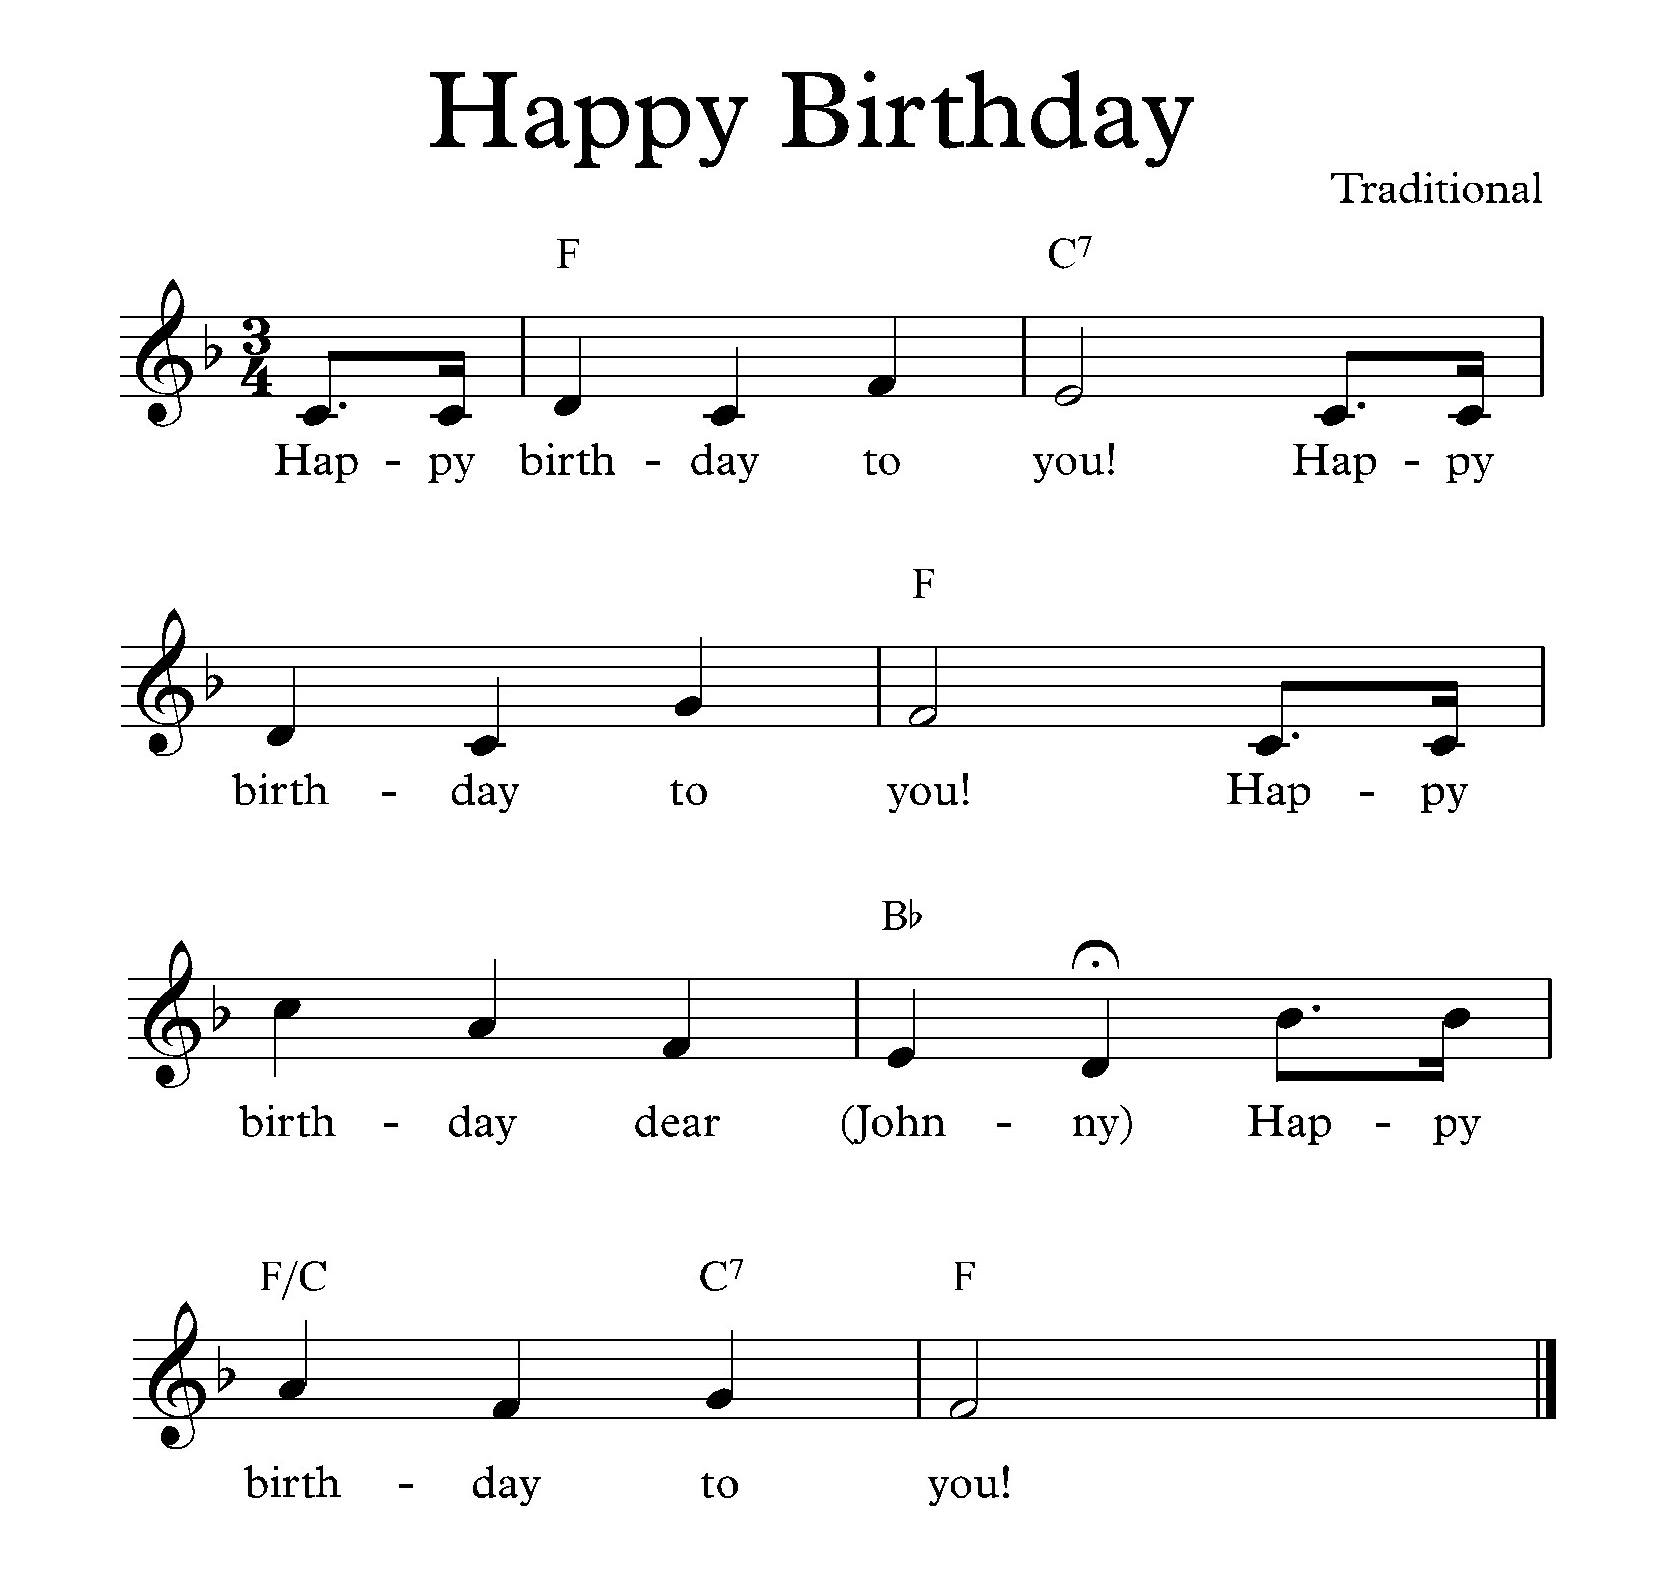 russian happy birthday song lyrics